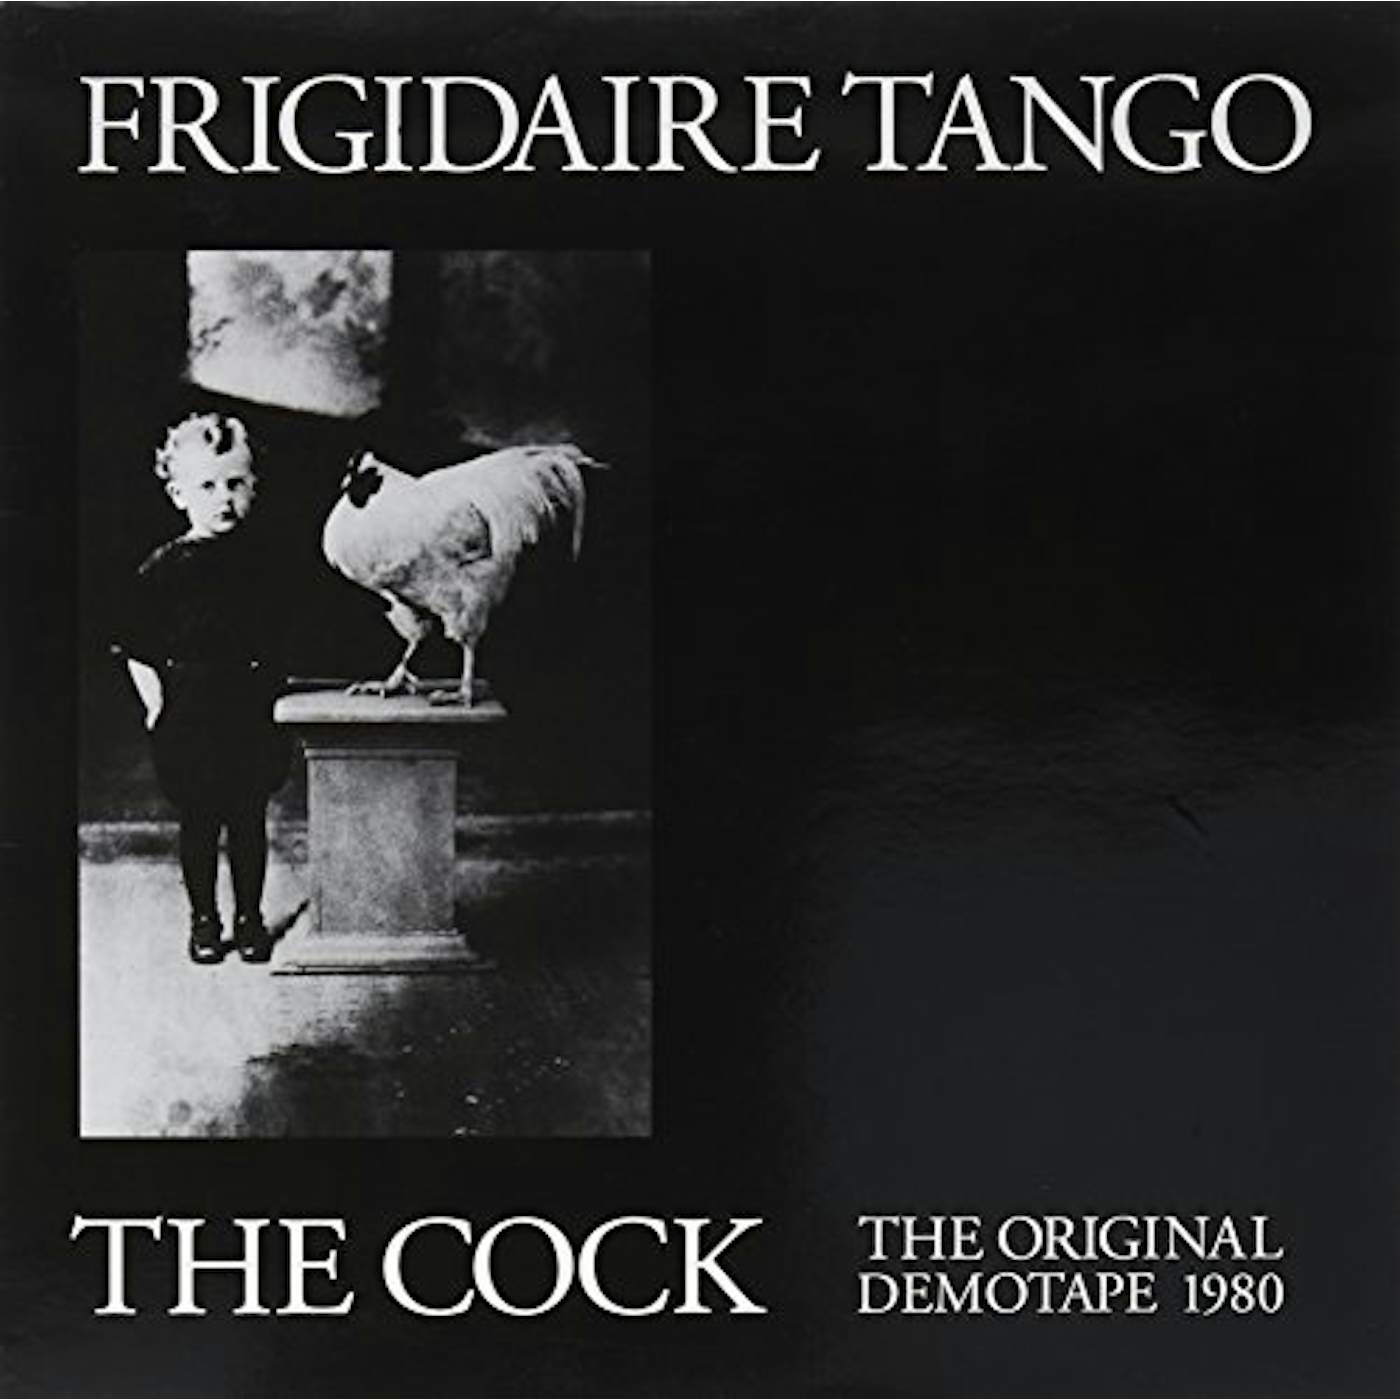 Frigidaire Tango COCK/DEMOS Vinyl Record